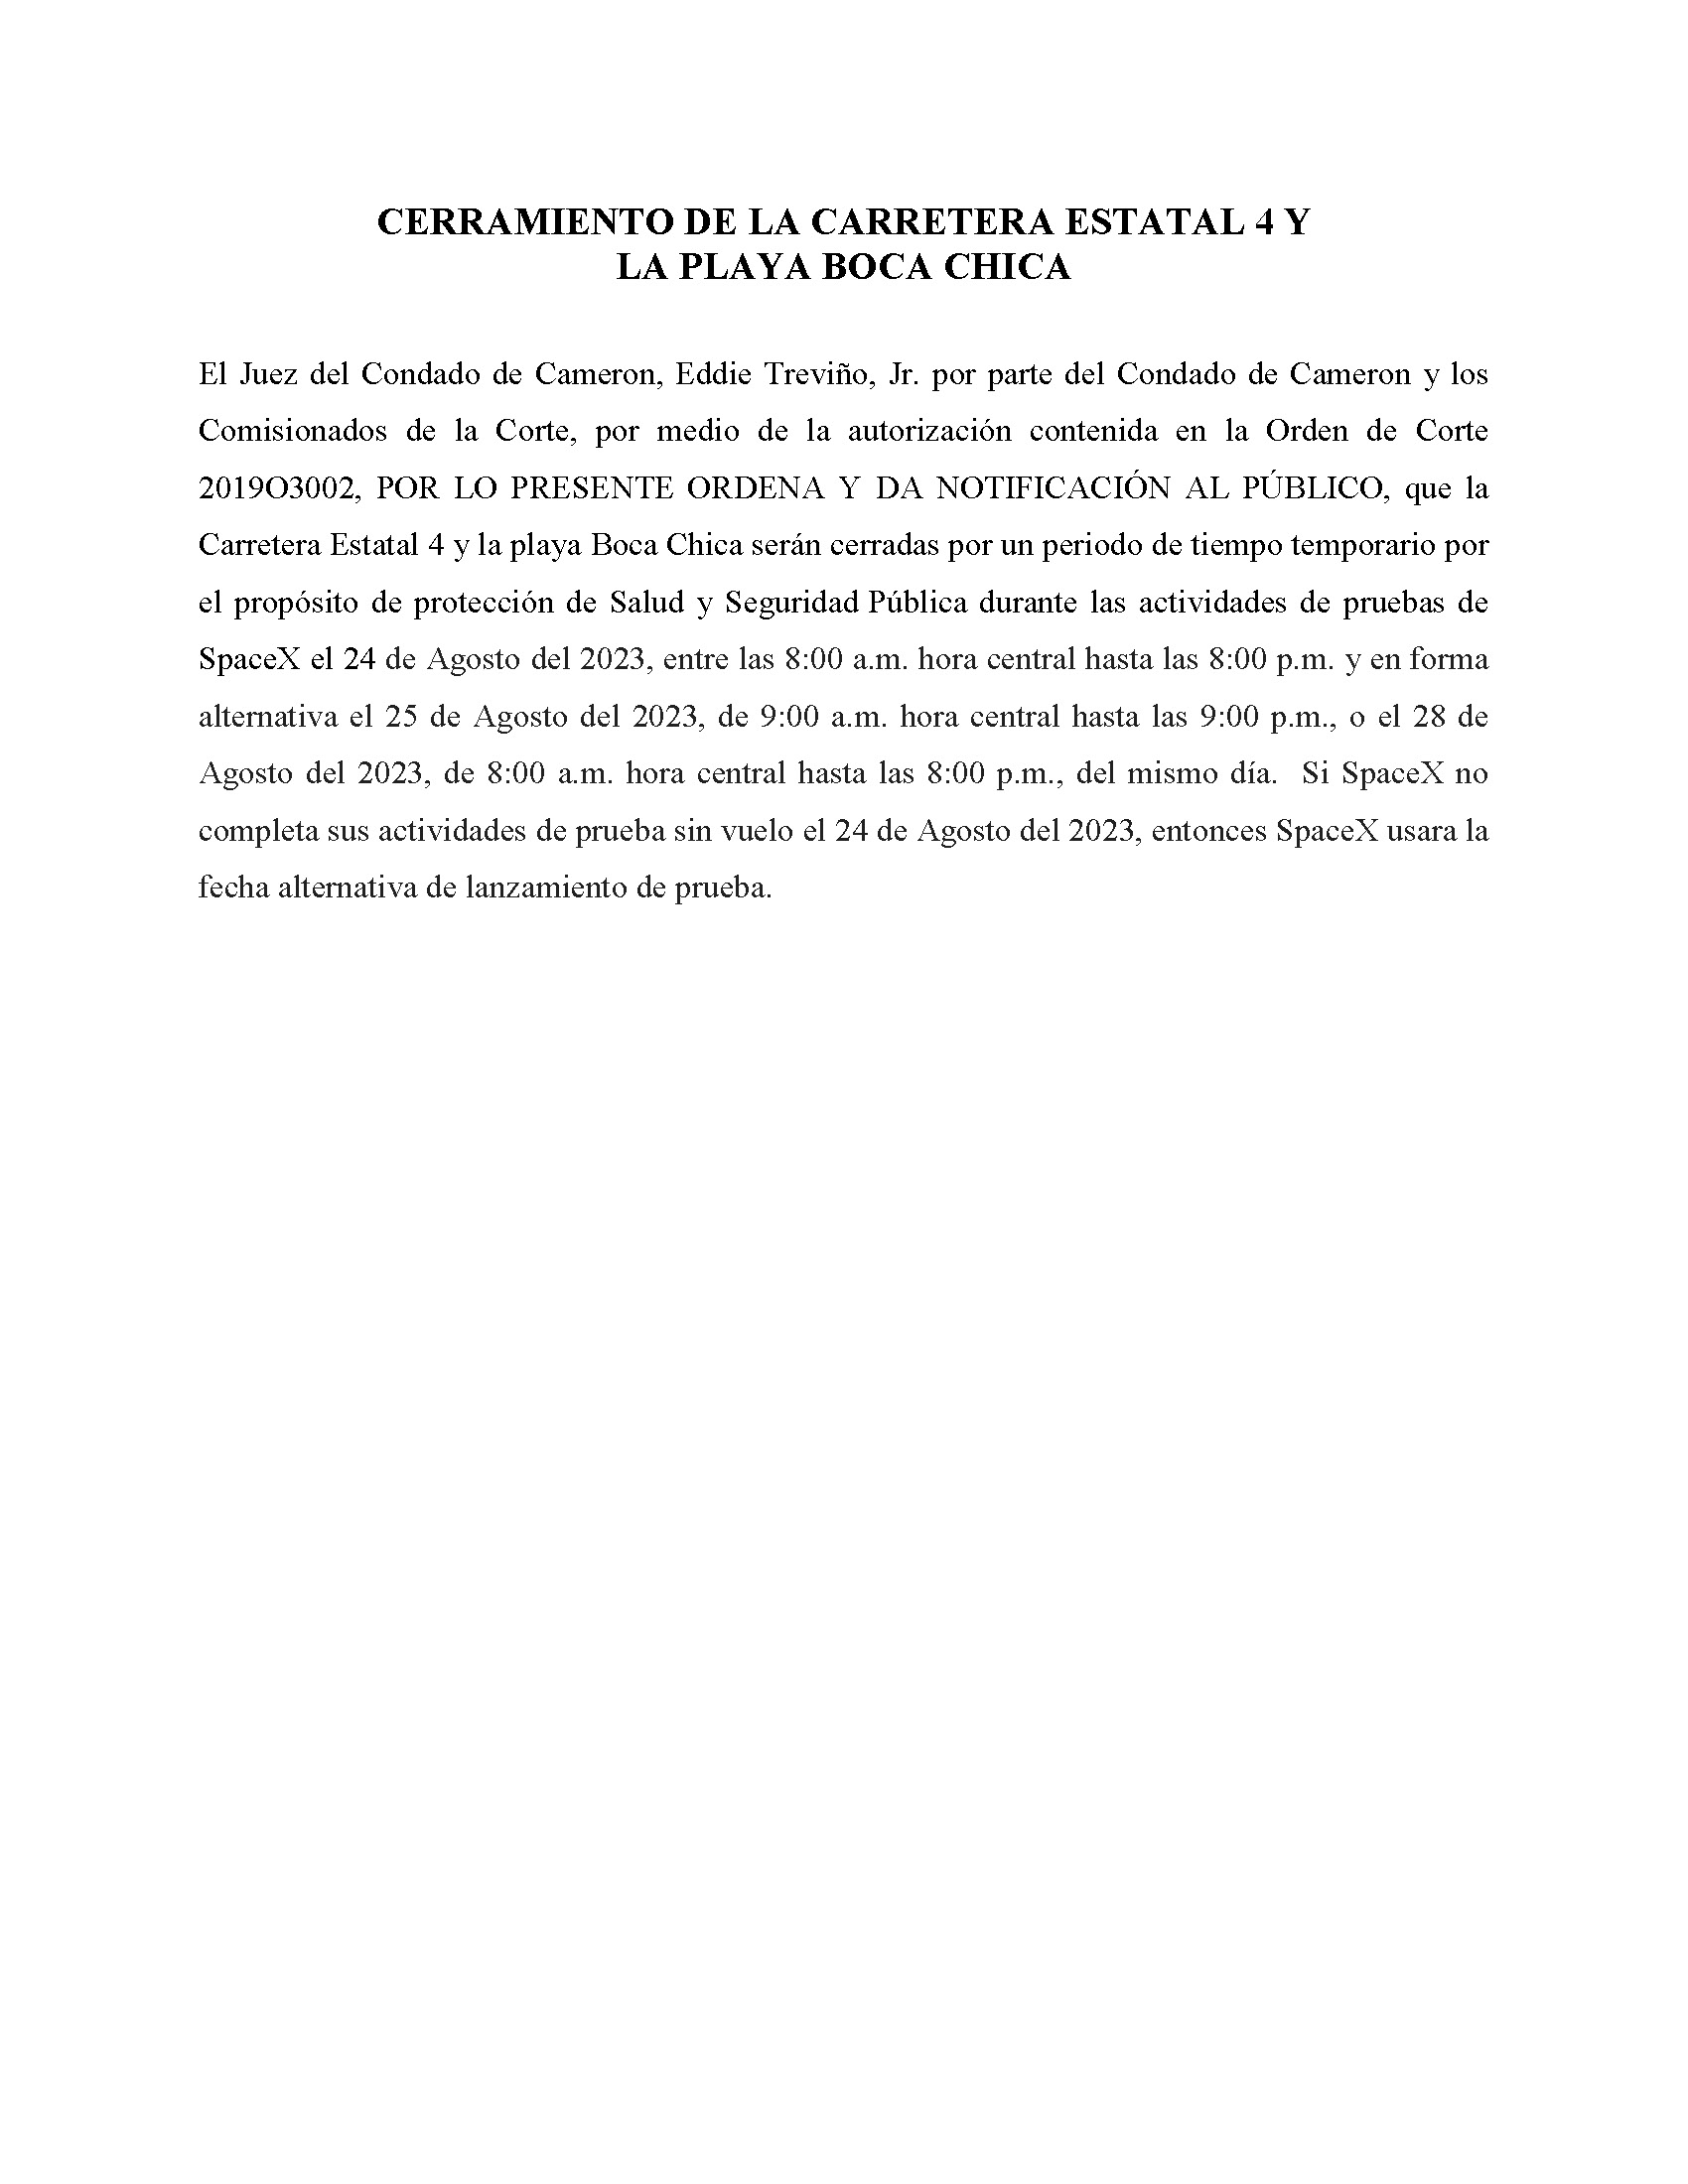 ORDER.CLOSURE OF HIGHWAY 4 Y LA PLAYA BOCA CHICA.SPANISH.08.24.23